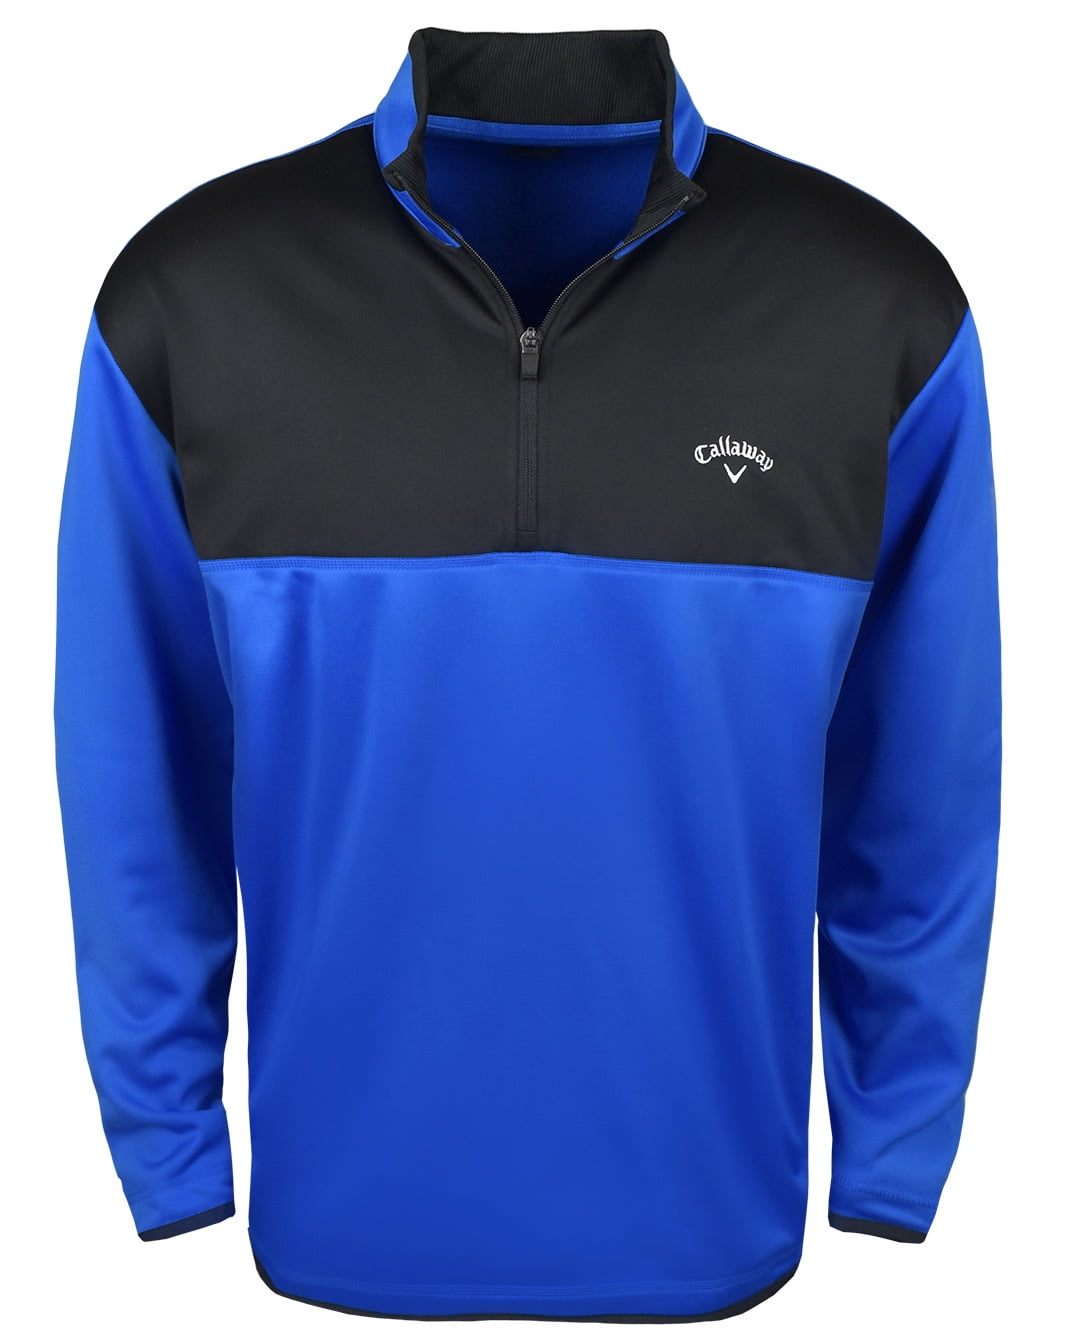 Callaway Golf 1/4 Zip Pullover Magnetic Blue Extra Large - Walmart.com